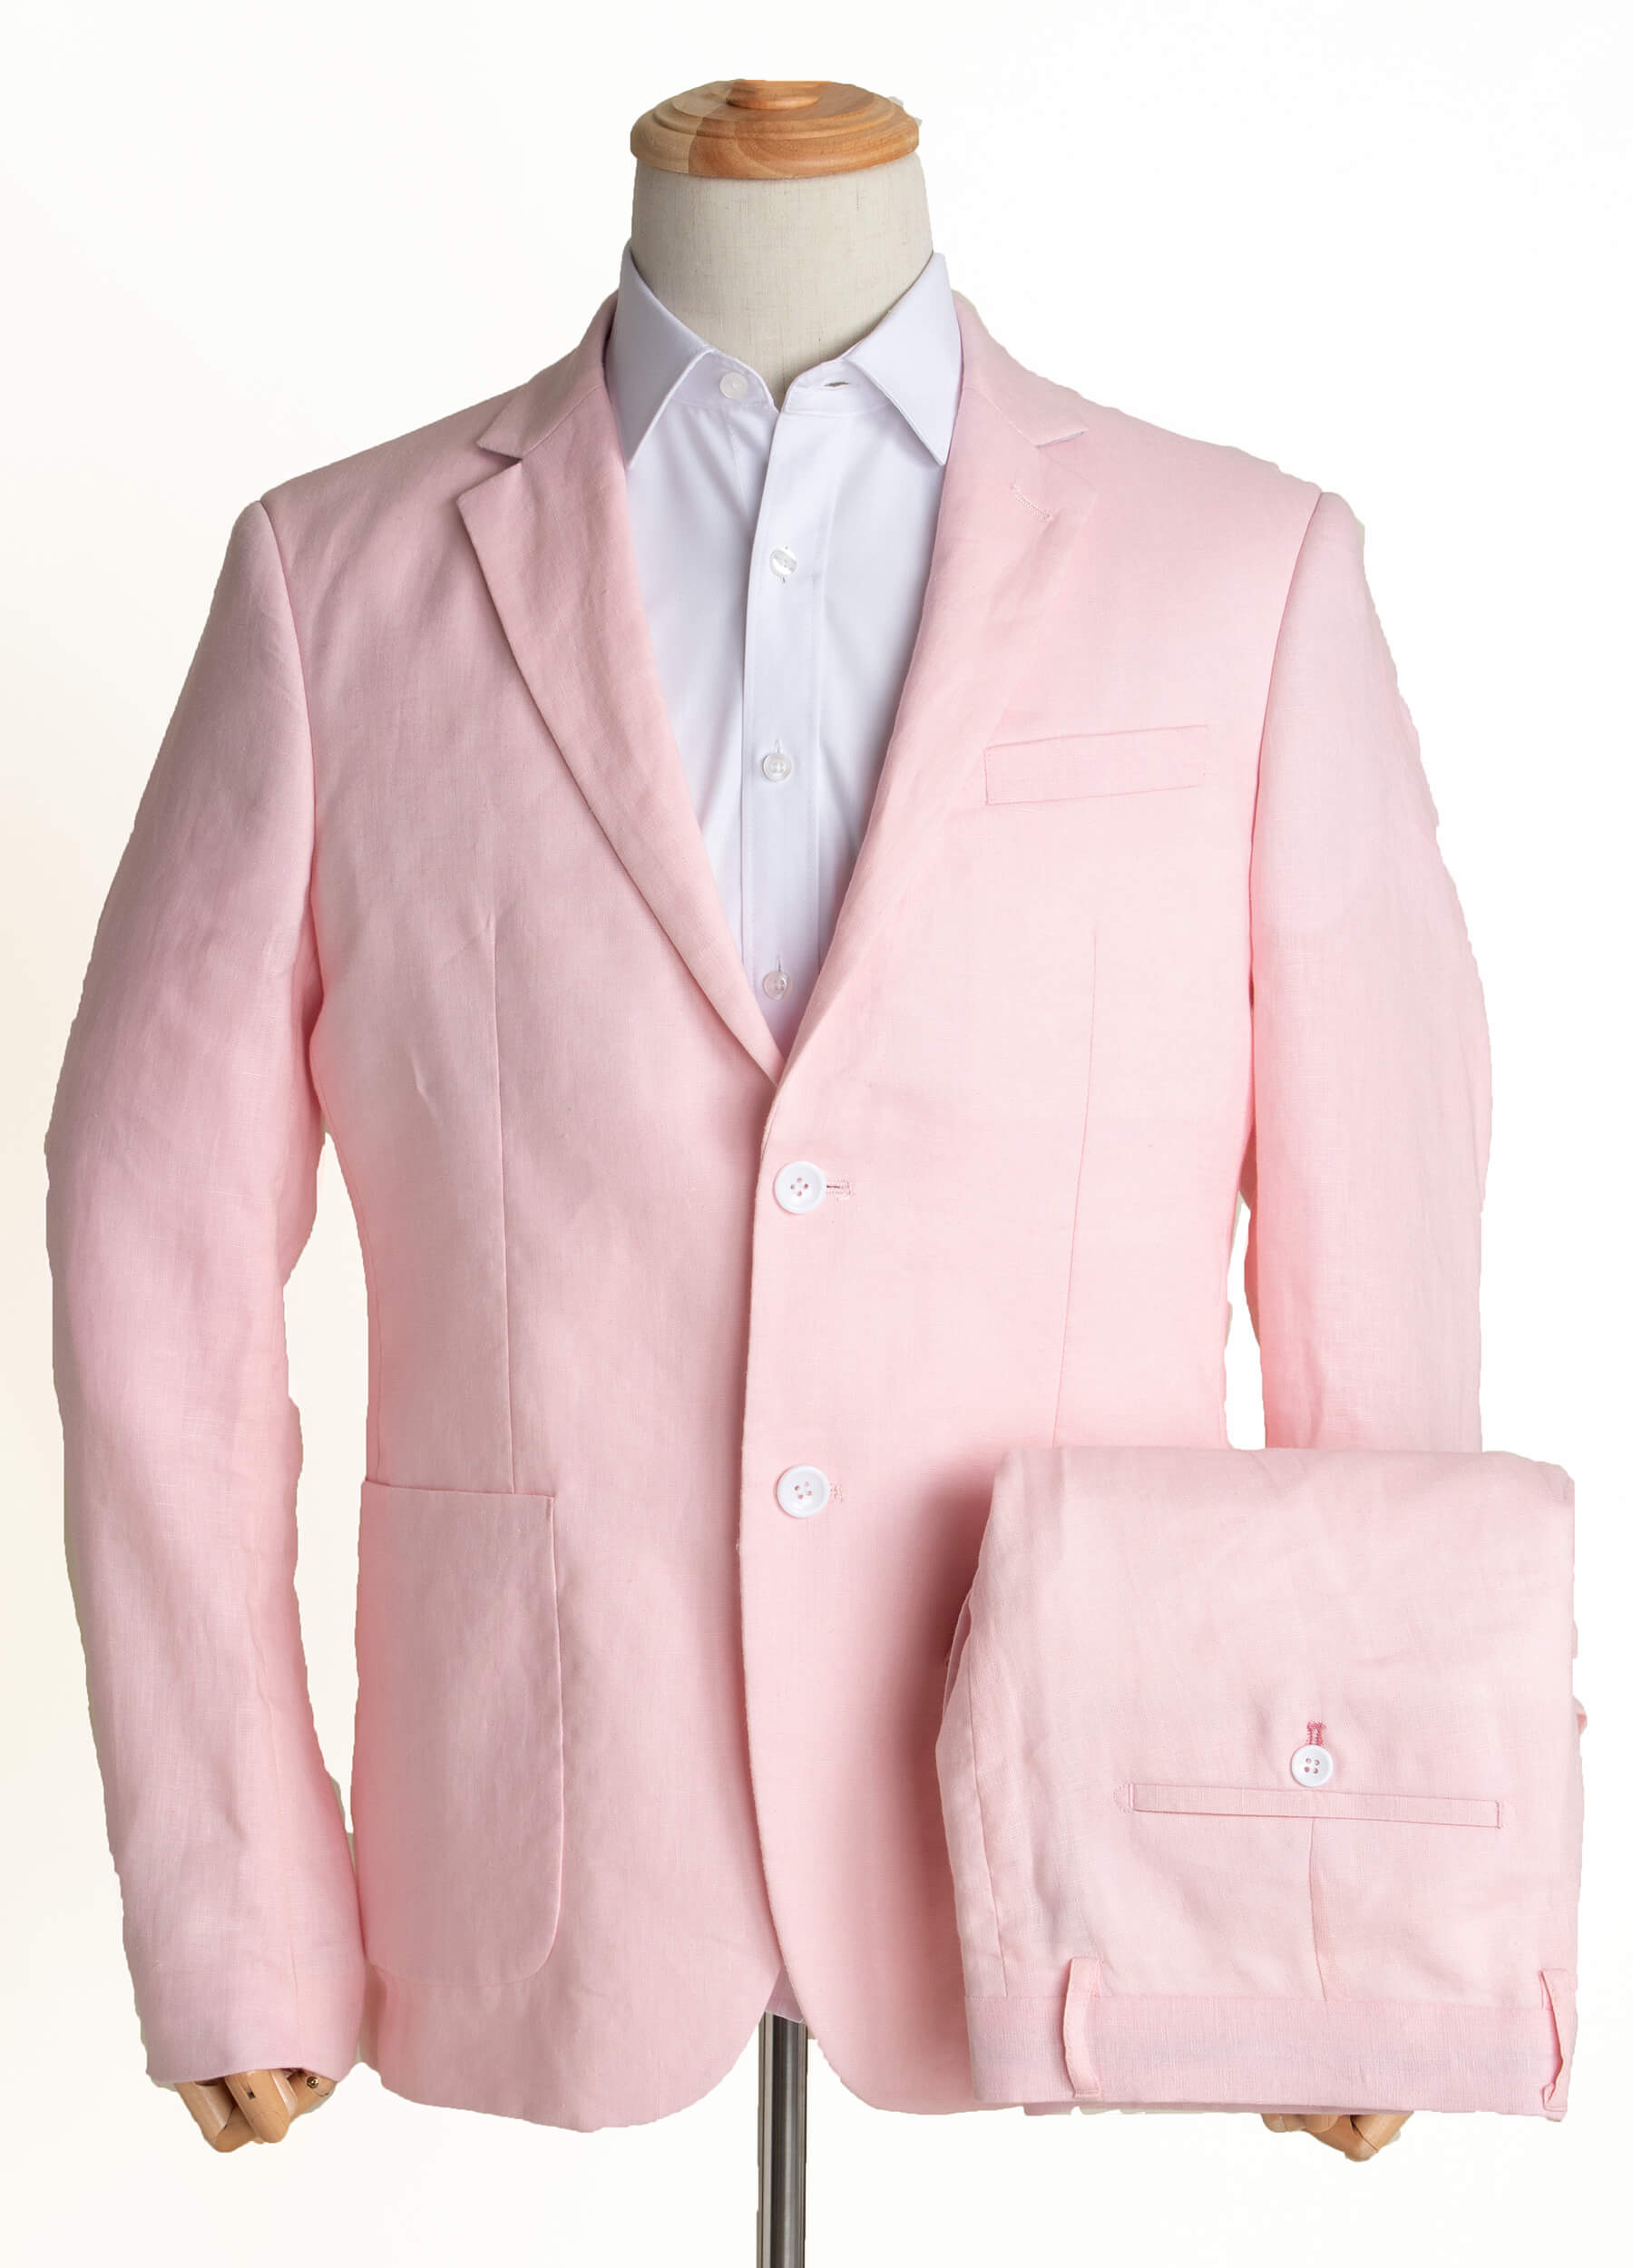 1PA1 Men's Linen Blend Suit Jacket Two Button Business Wedding Slim Fit  Blazer,Pink,2XL 